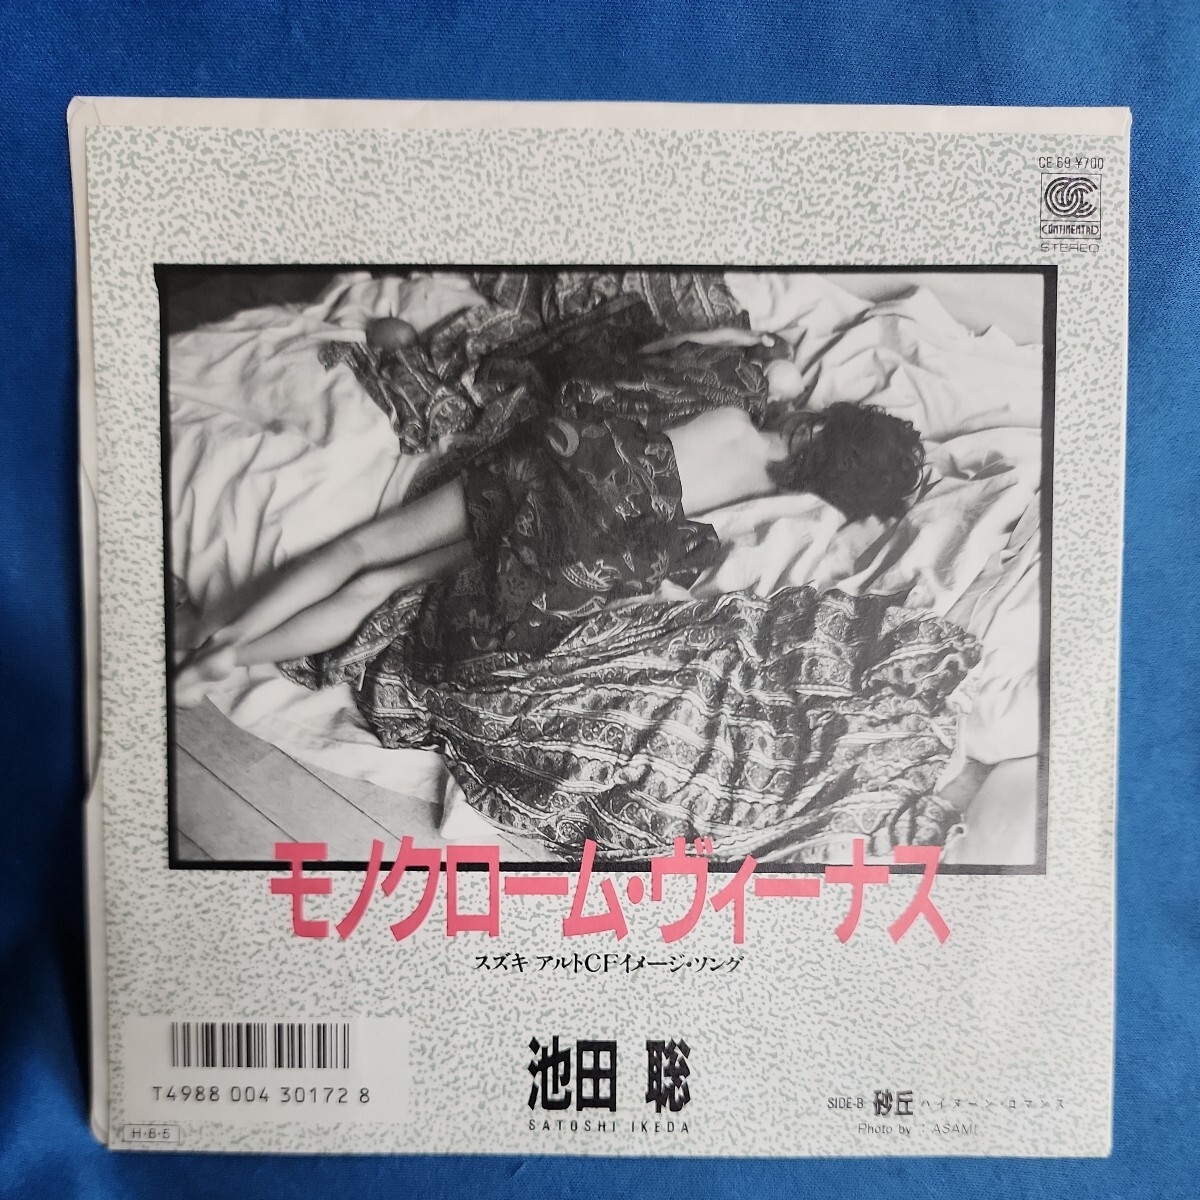 [EP record ] Ikeda Satoshi monochrome -m* venus / sand .( is dog -n* romance )/ maru ticket * record / super-discount b/4y